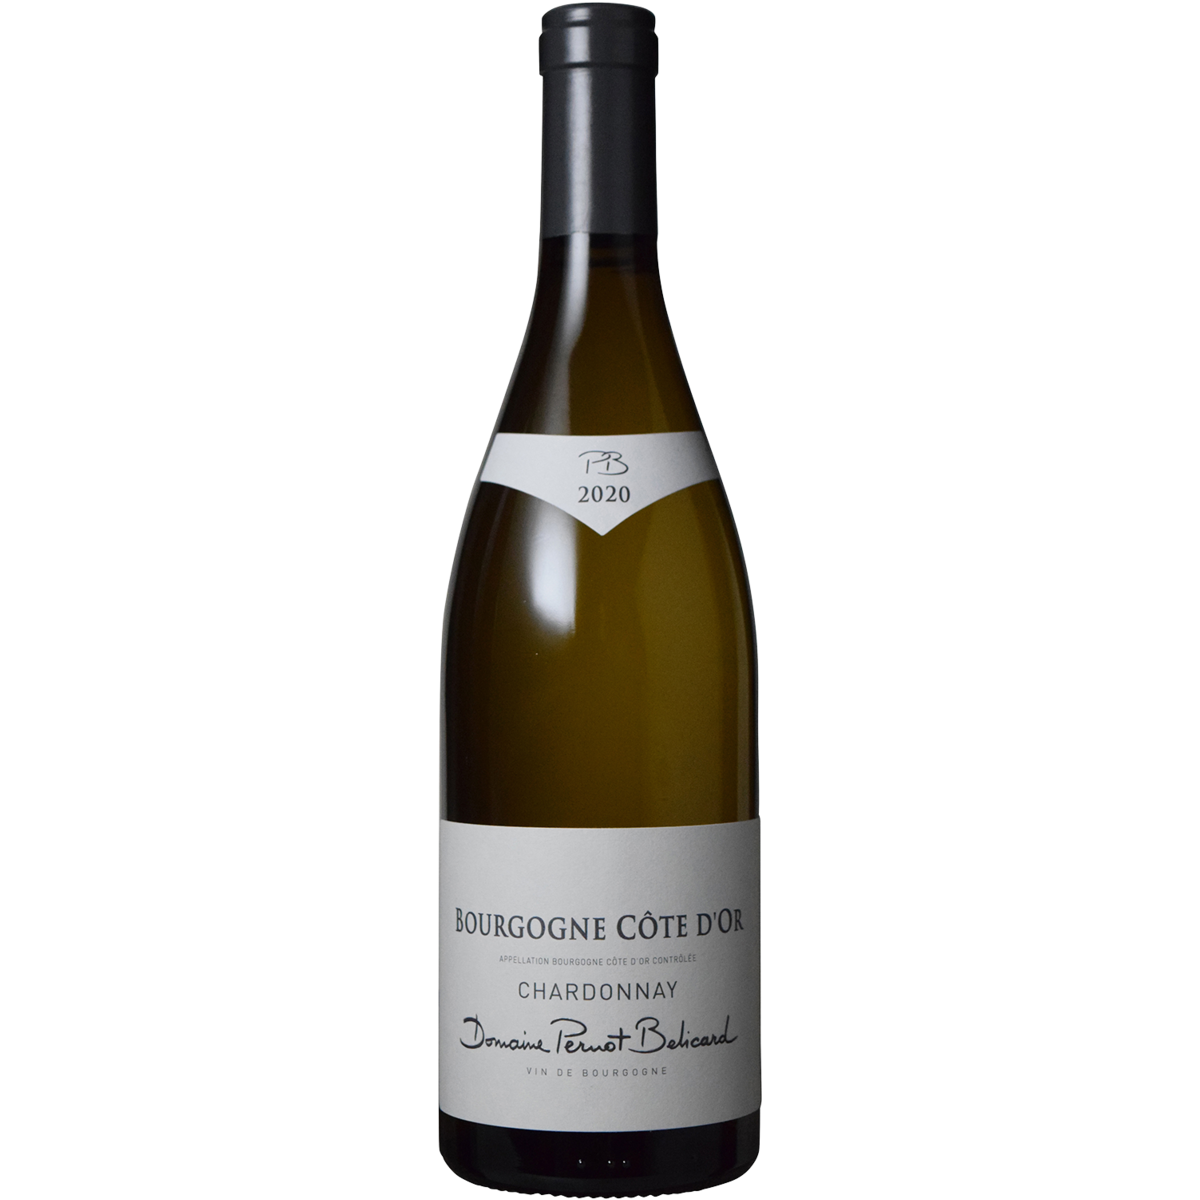 Bourgogne Cote d'Or Chardonnay